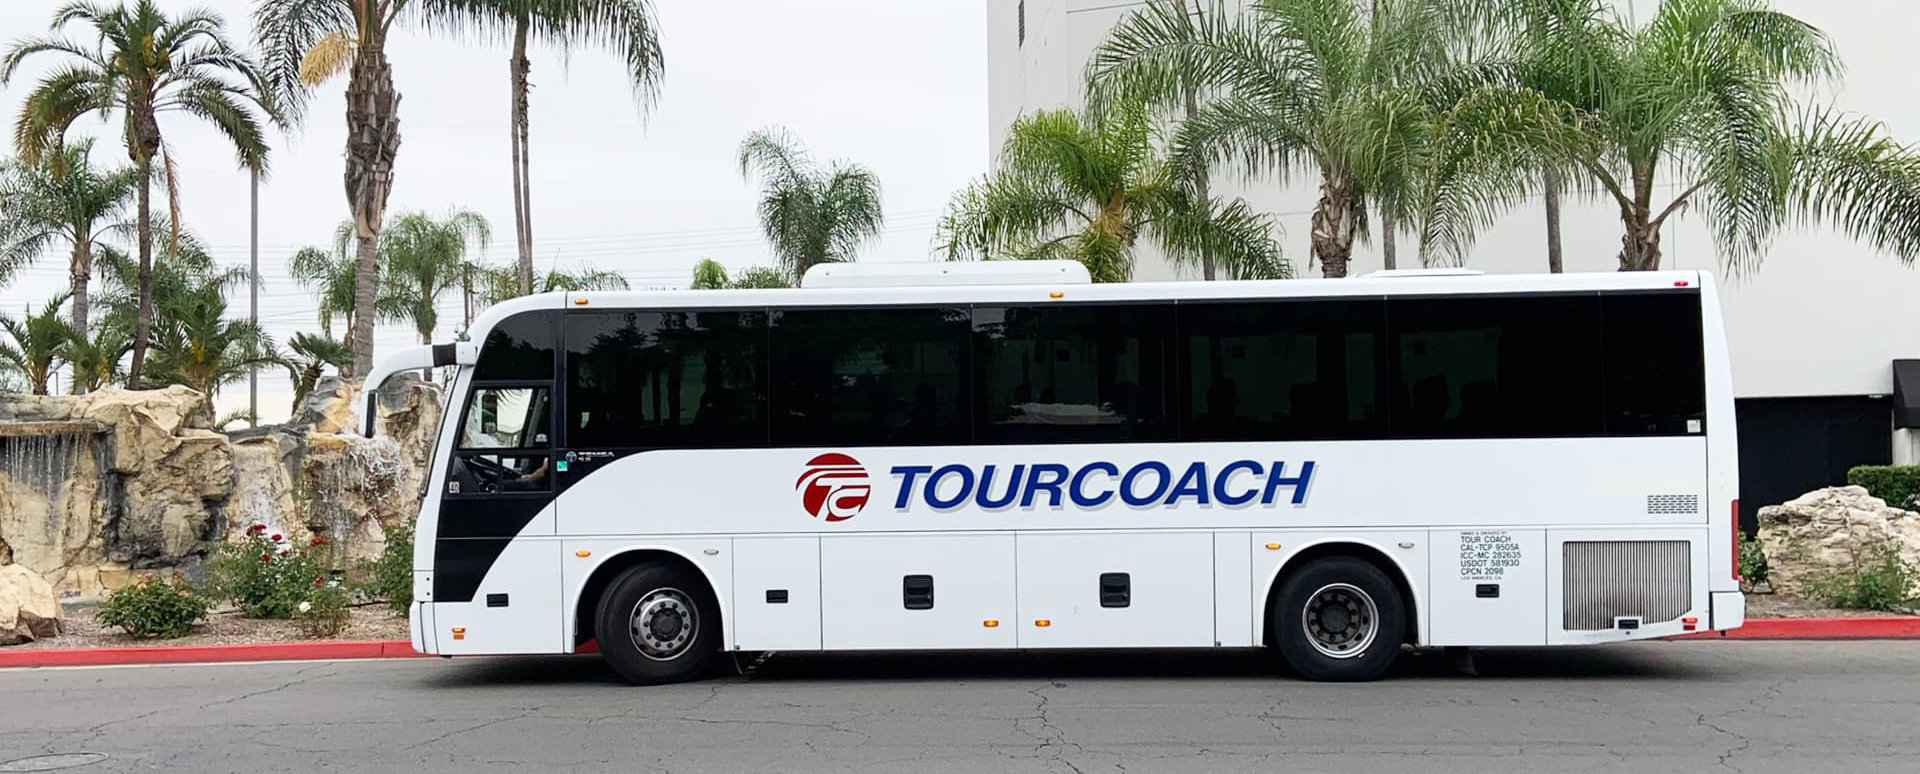 the tour coach